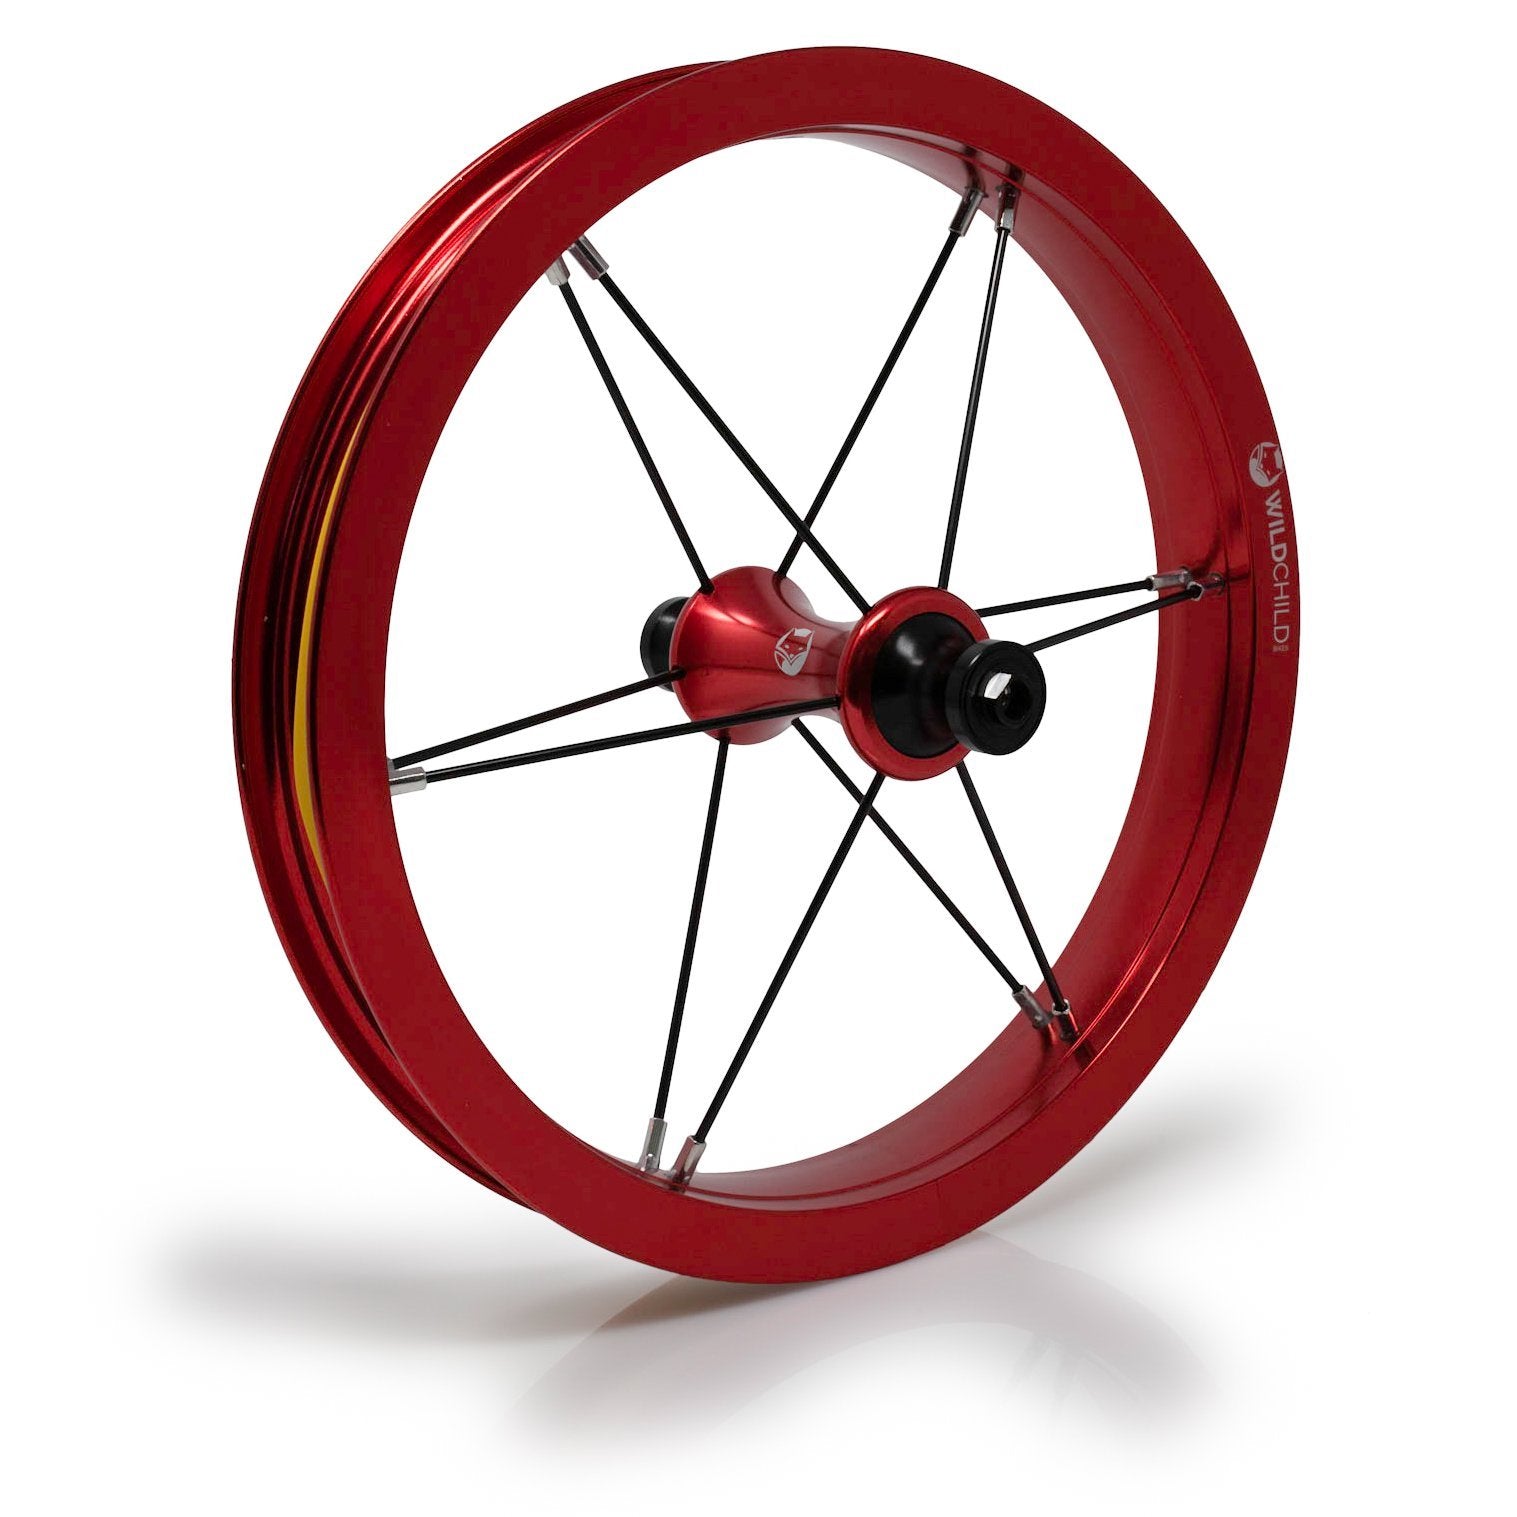 12 inch bike wheel